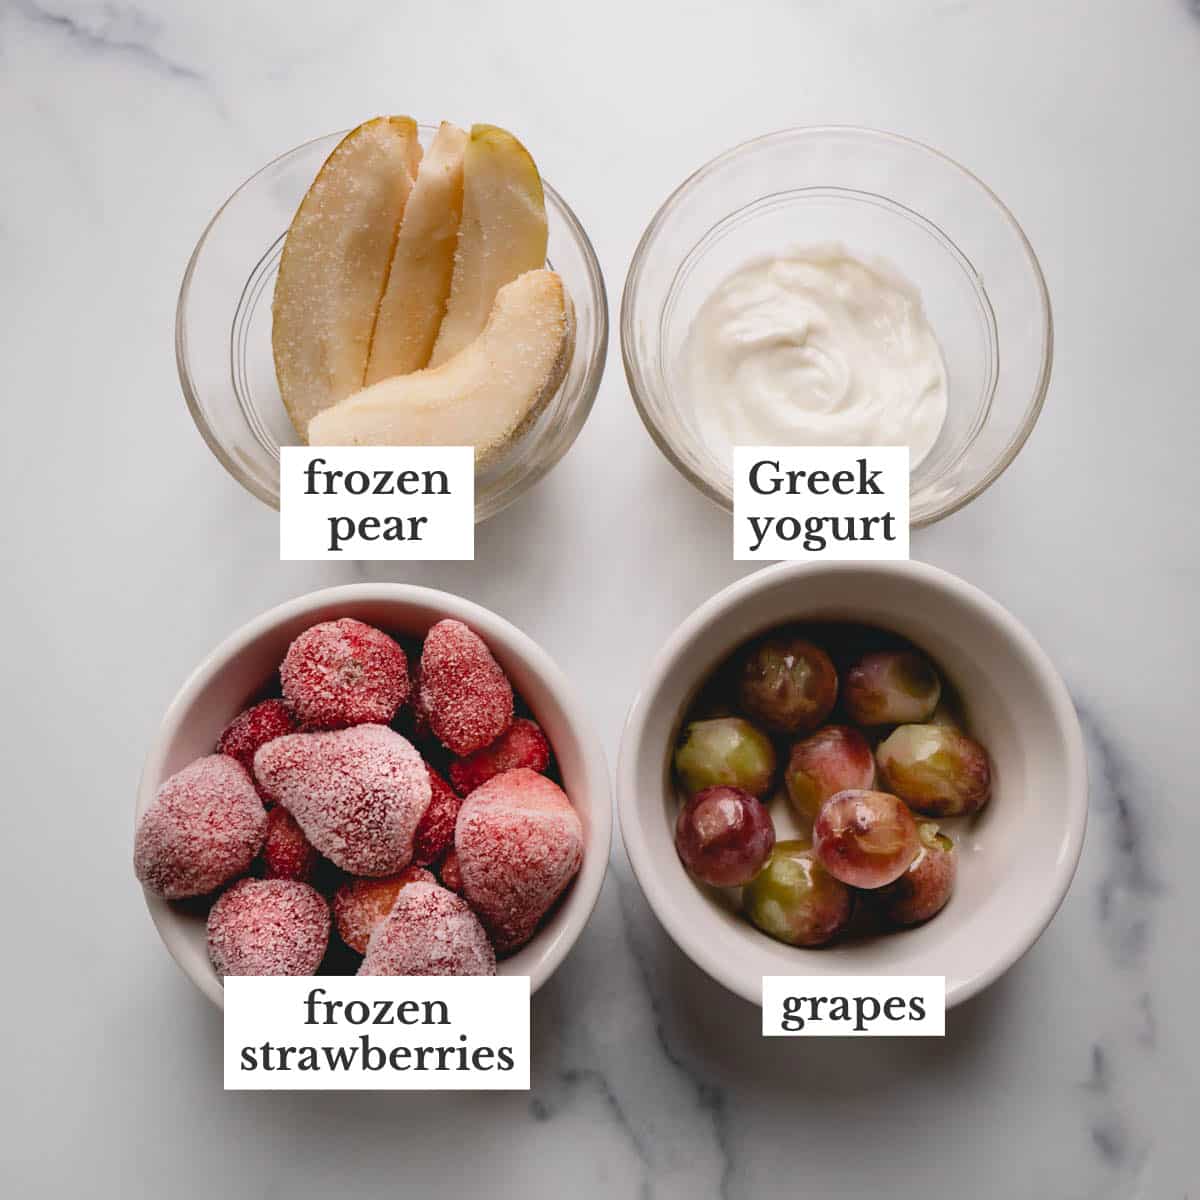 frozen pear, frozen strawberries, grapes, and yogurt. 